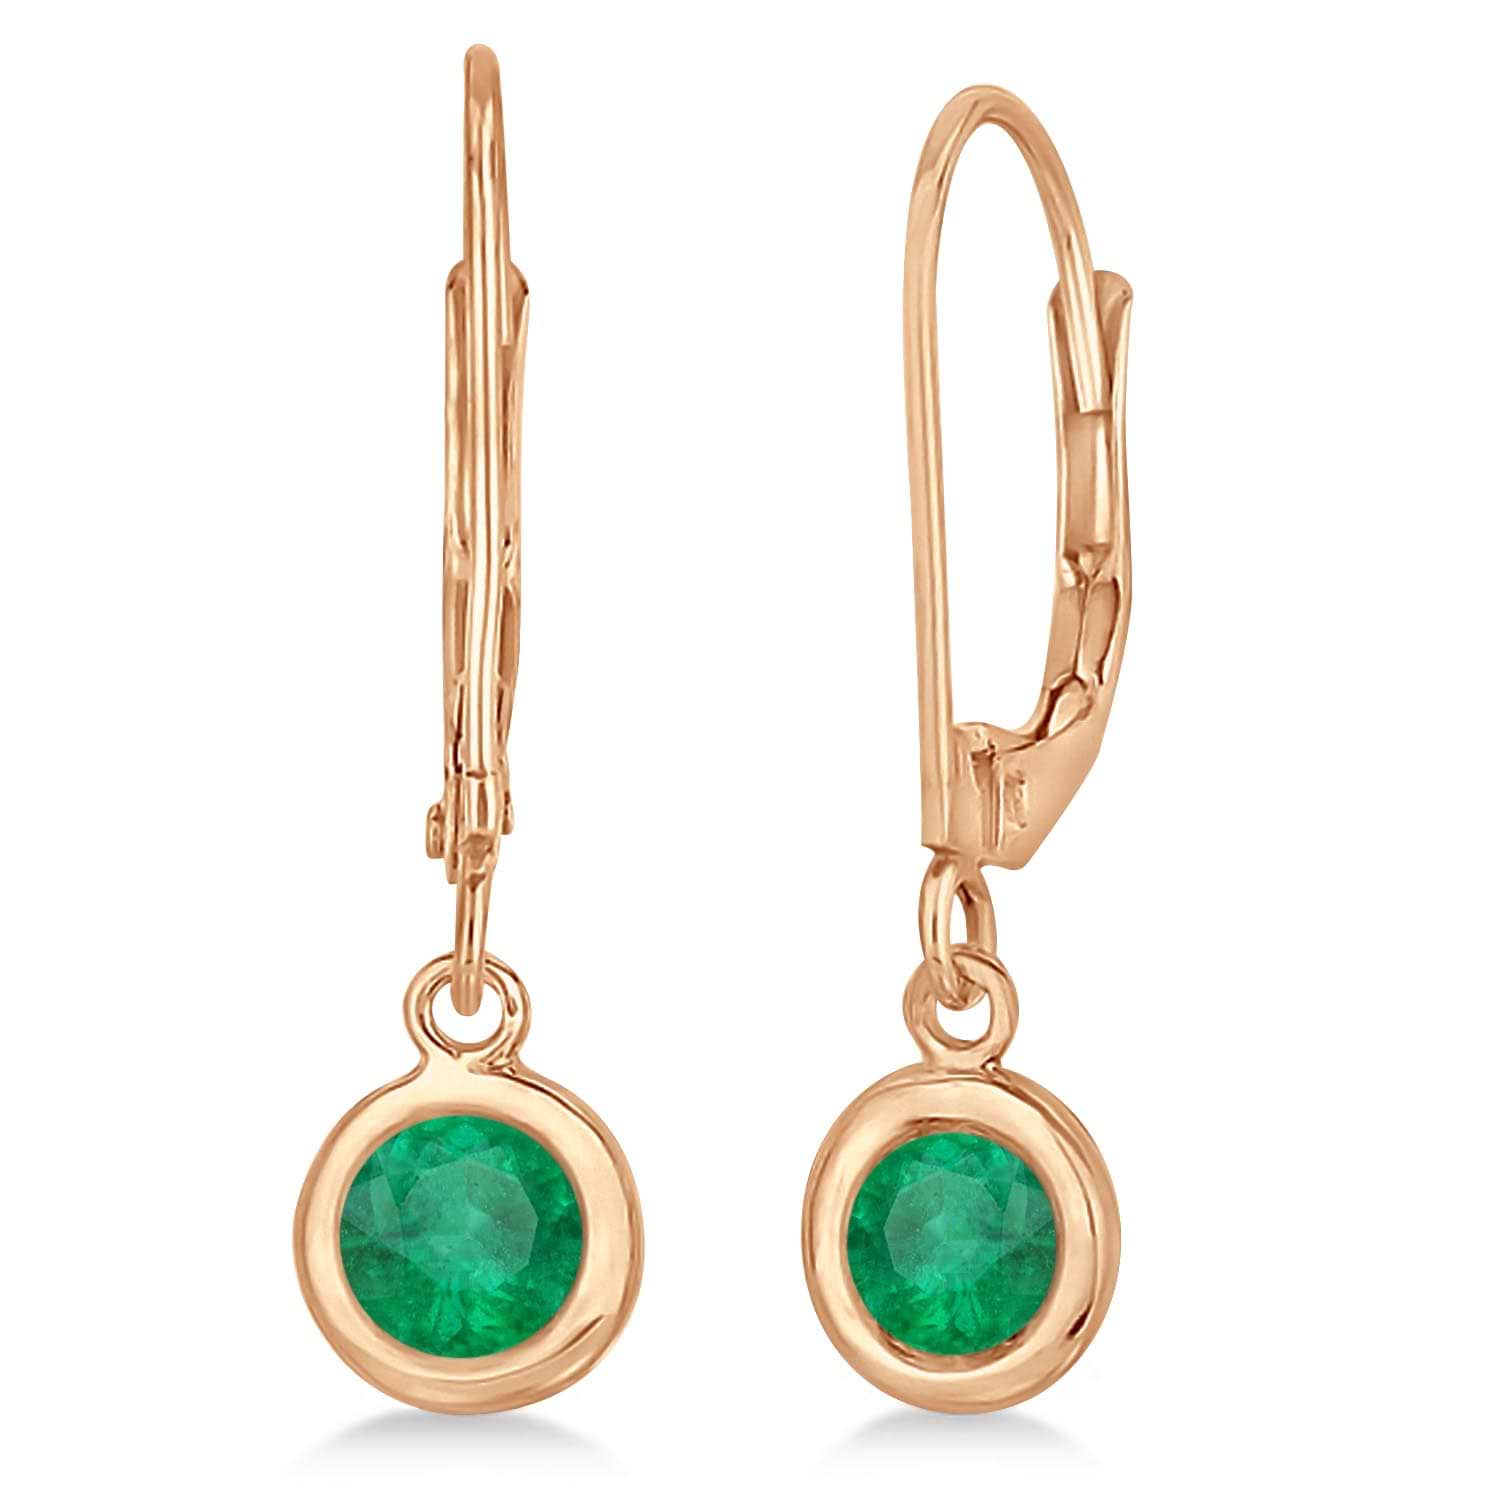 Leverback Dangling Drop Emerald Earrings 14k Rose Gold (1.00ct)